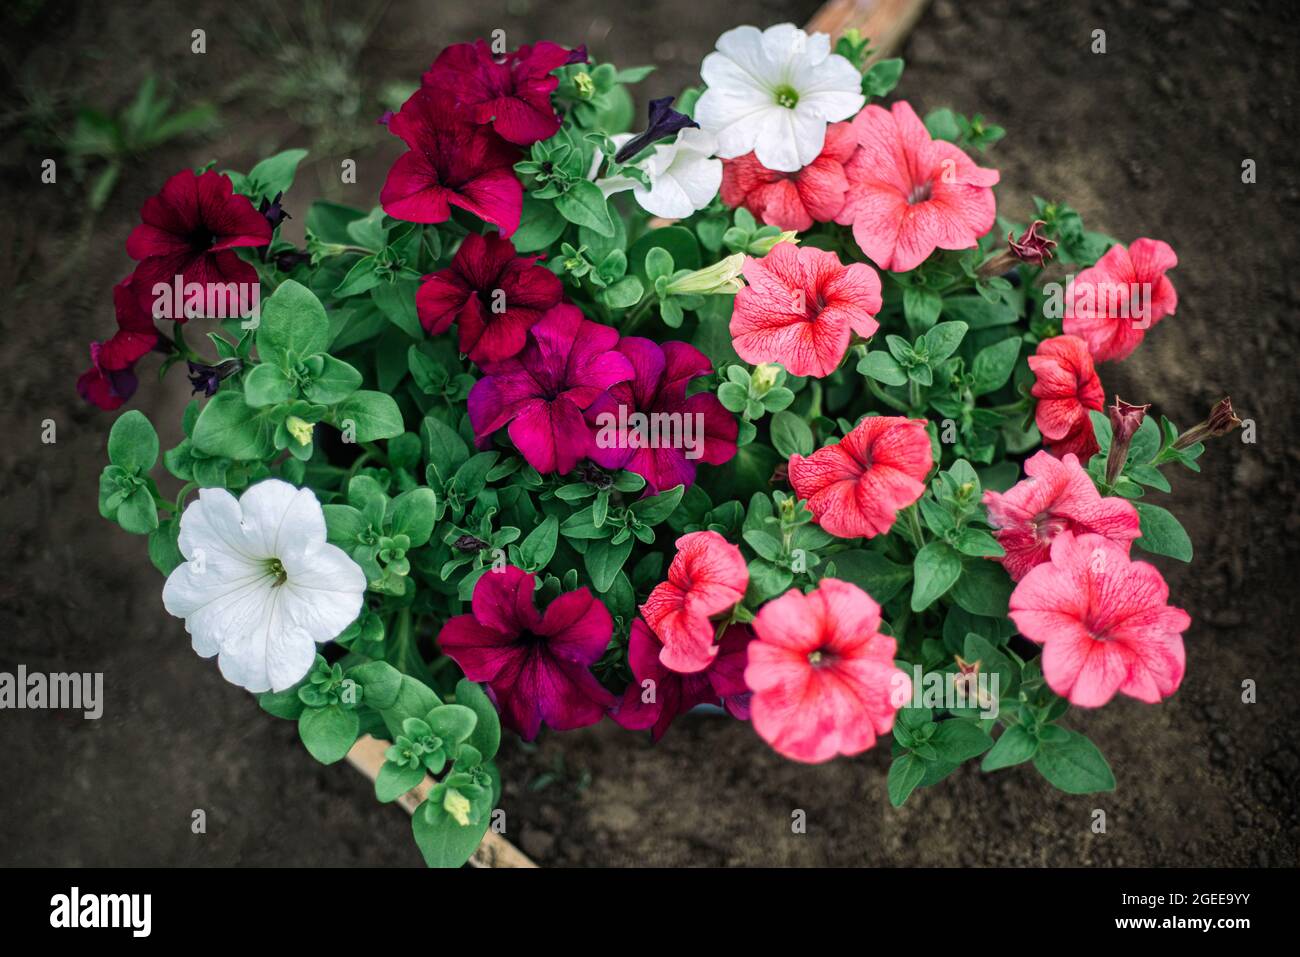 Petunia flowers for sale in garden Stock Photo